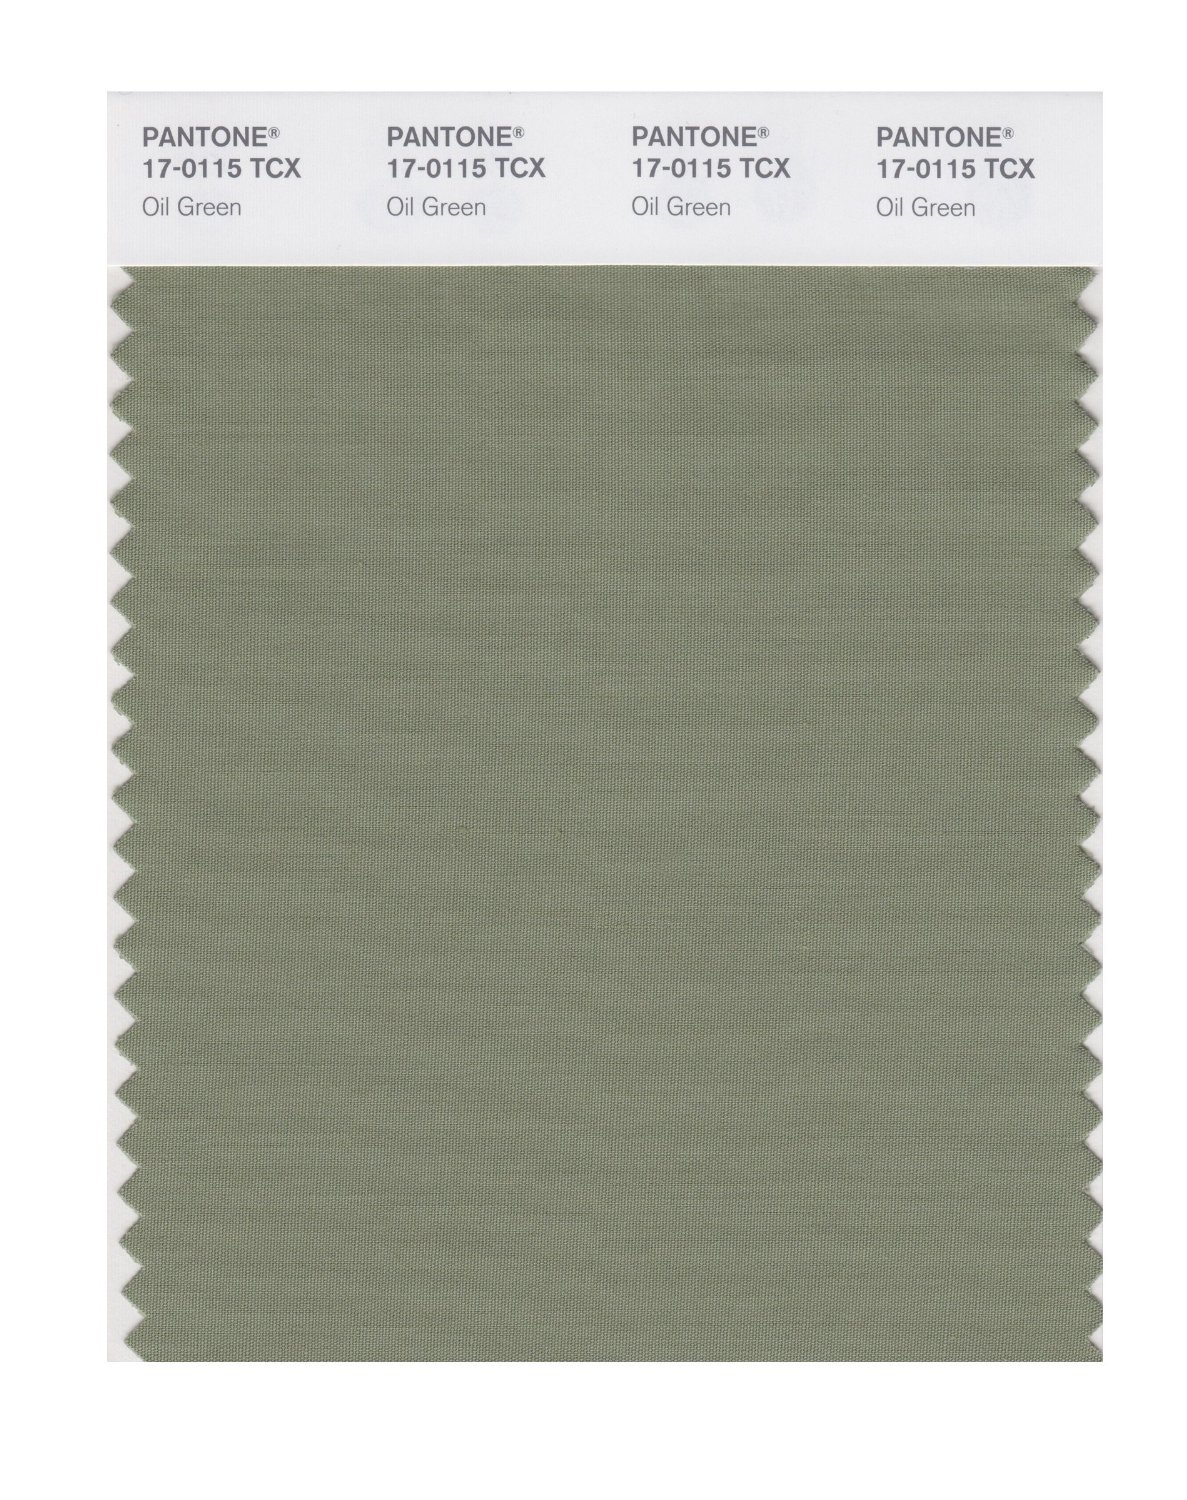 Pantone Cotton Swatch 17-0115 Oil Green